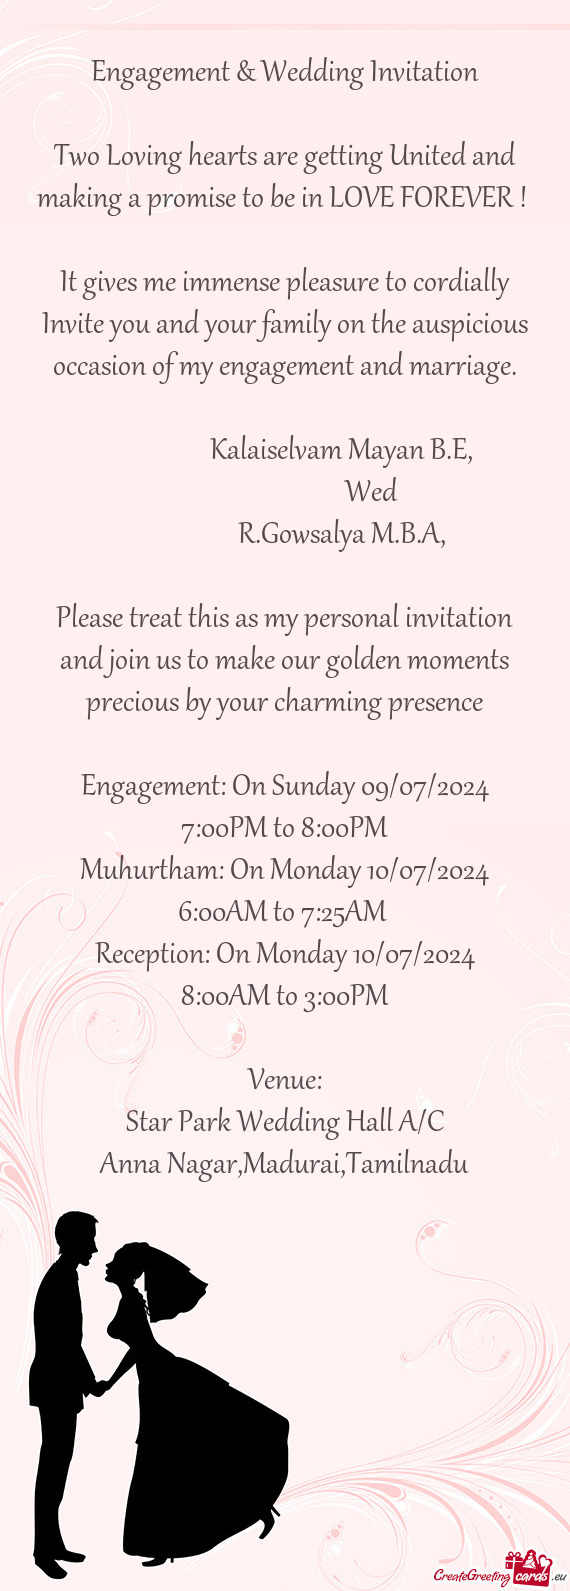 Engagement & Wedding Invitation